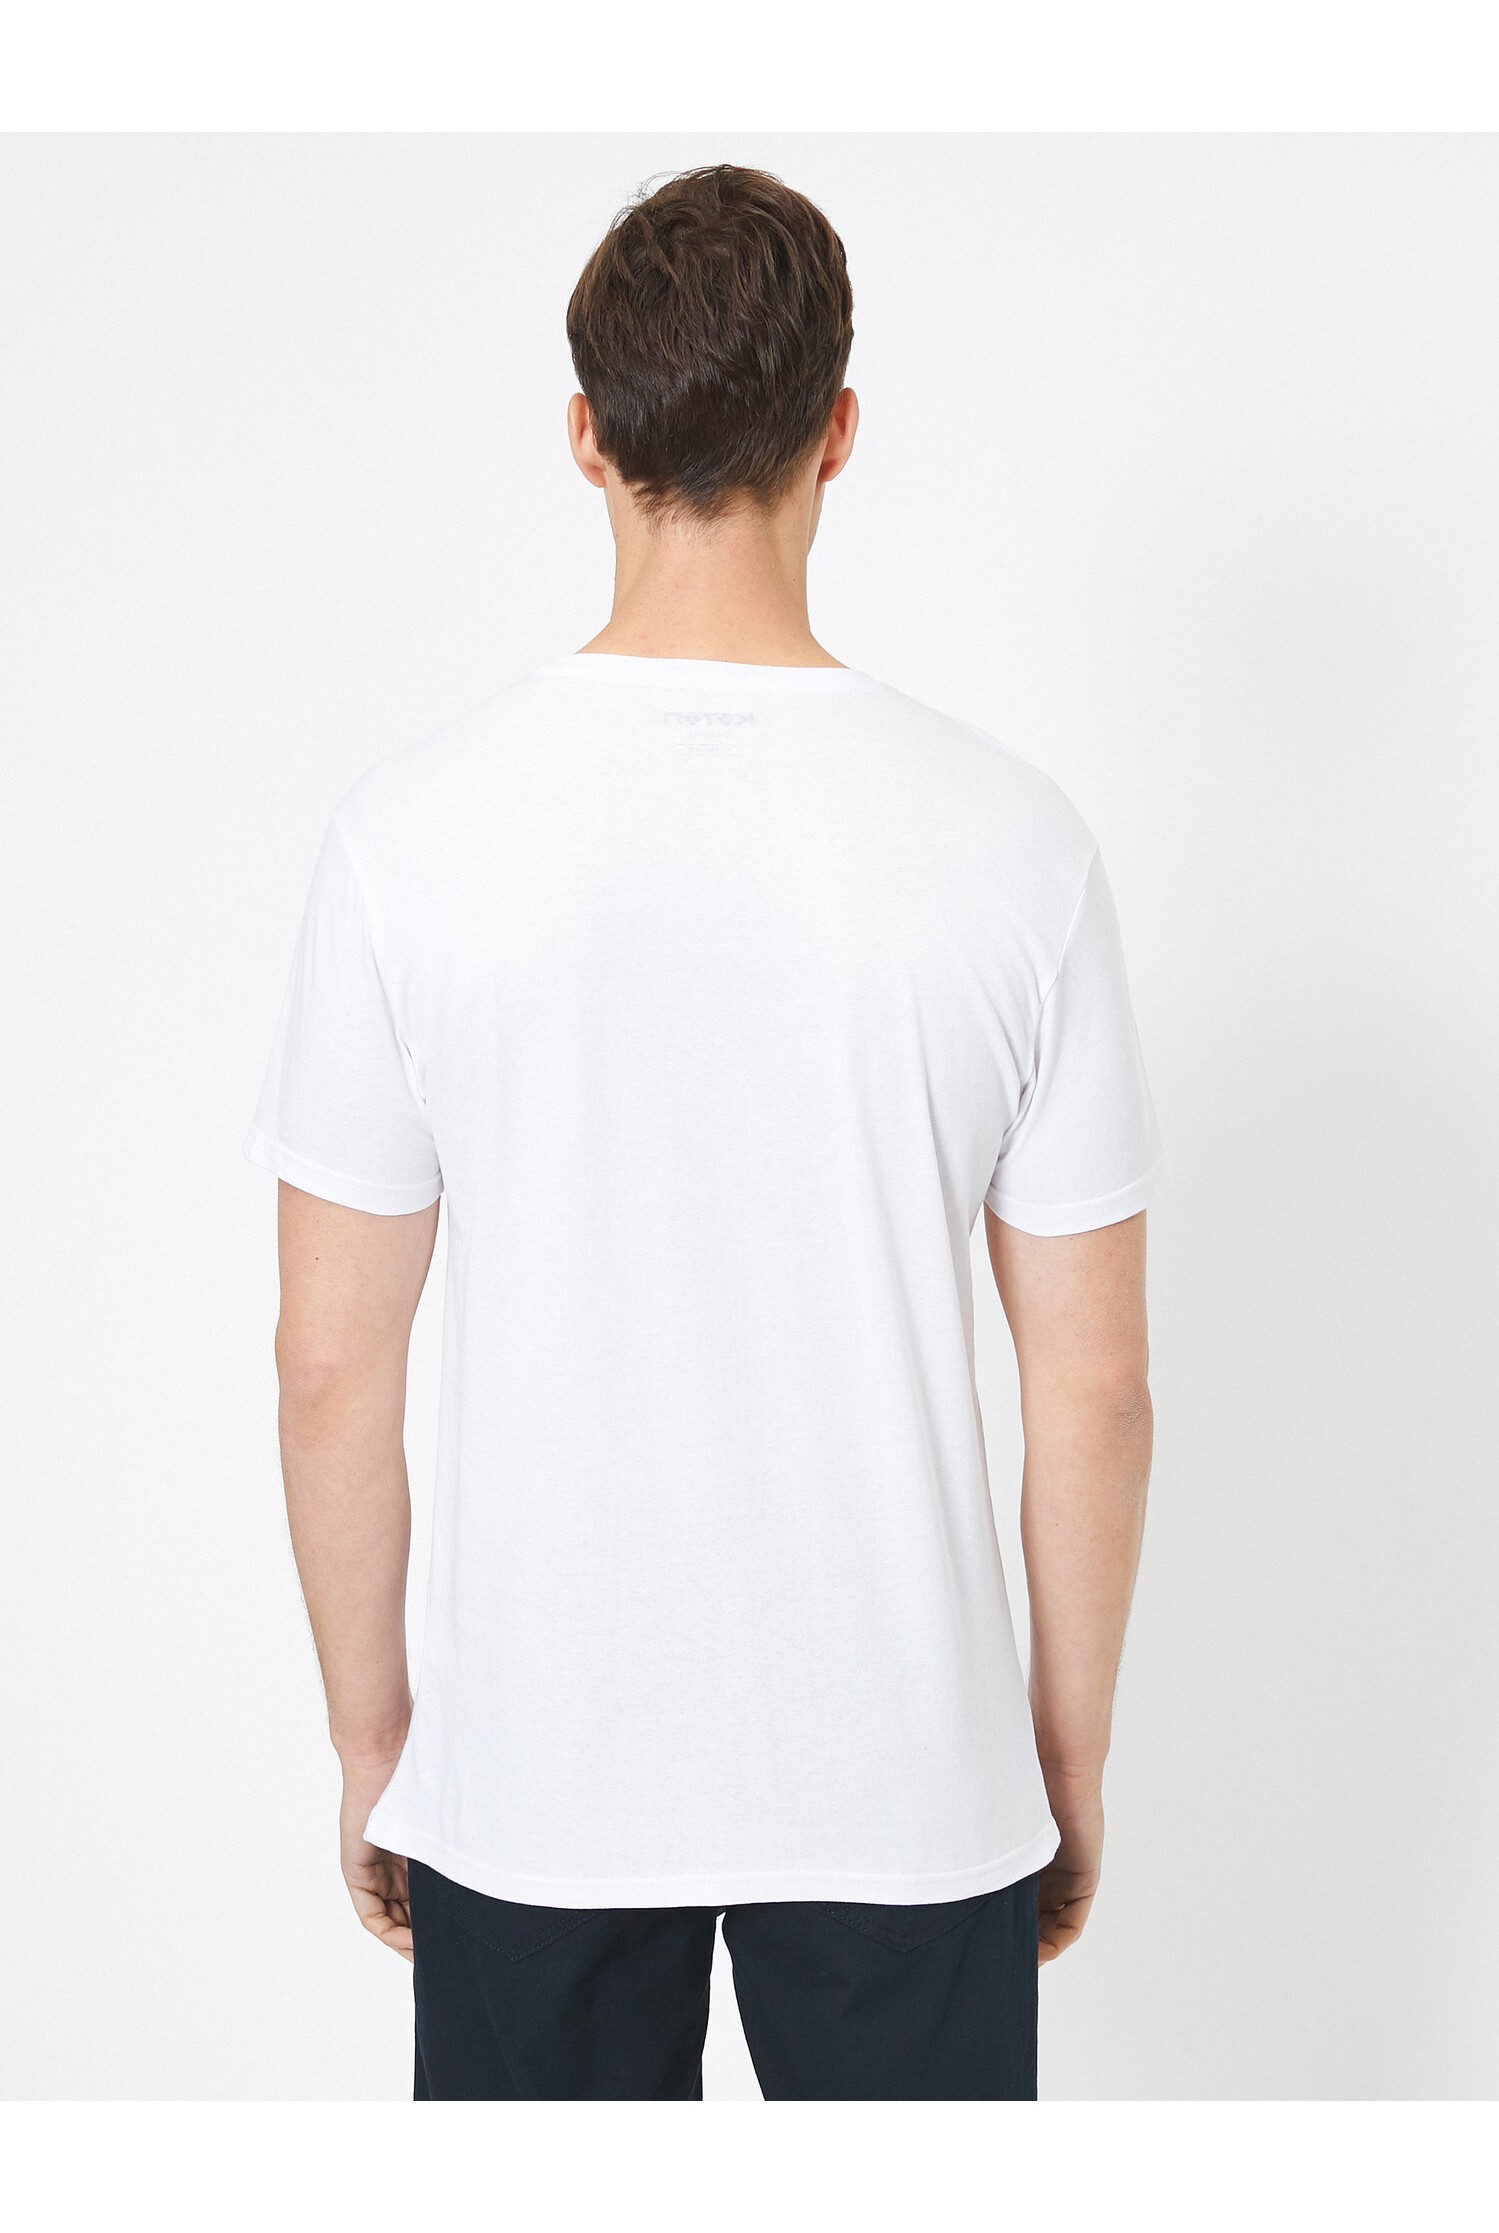 men's white T-shirt